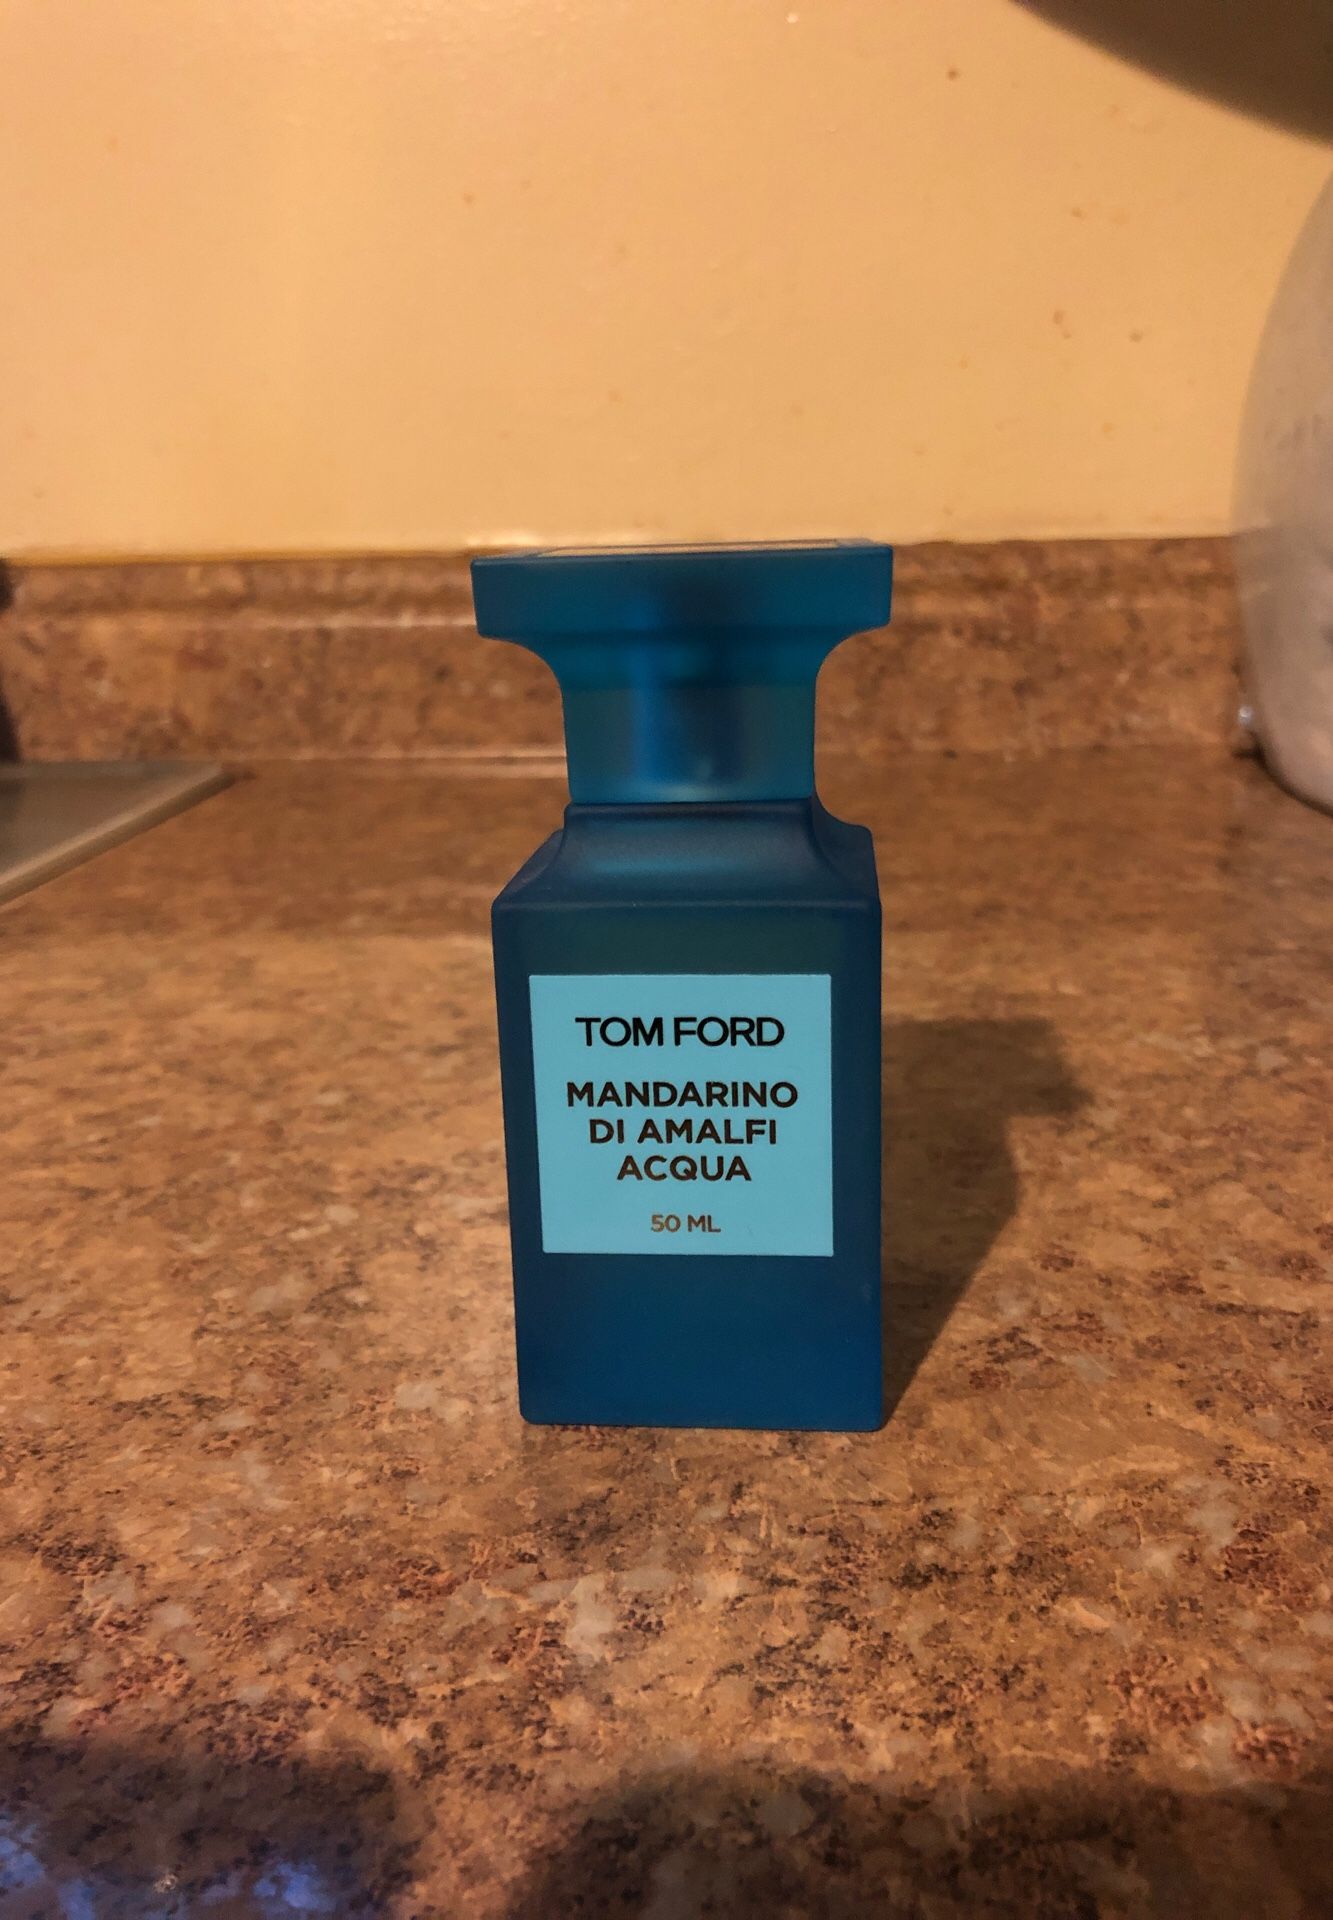 Tom Ford Mandarino Di Amalfi Acqua men’s Fragrance